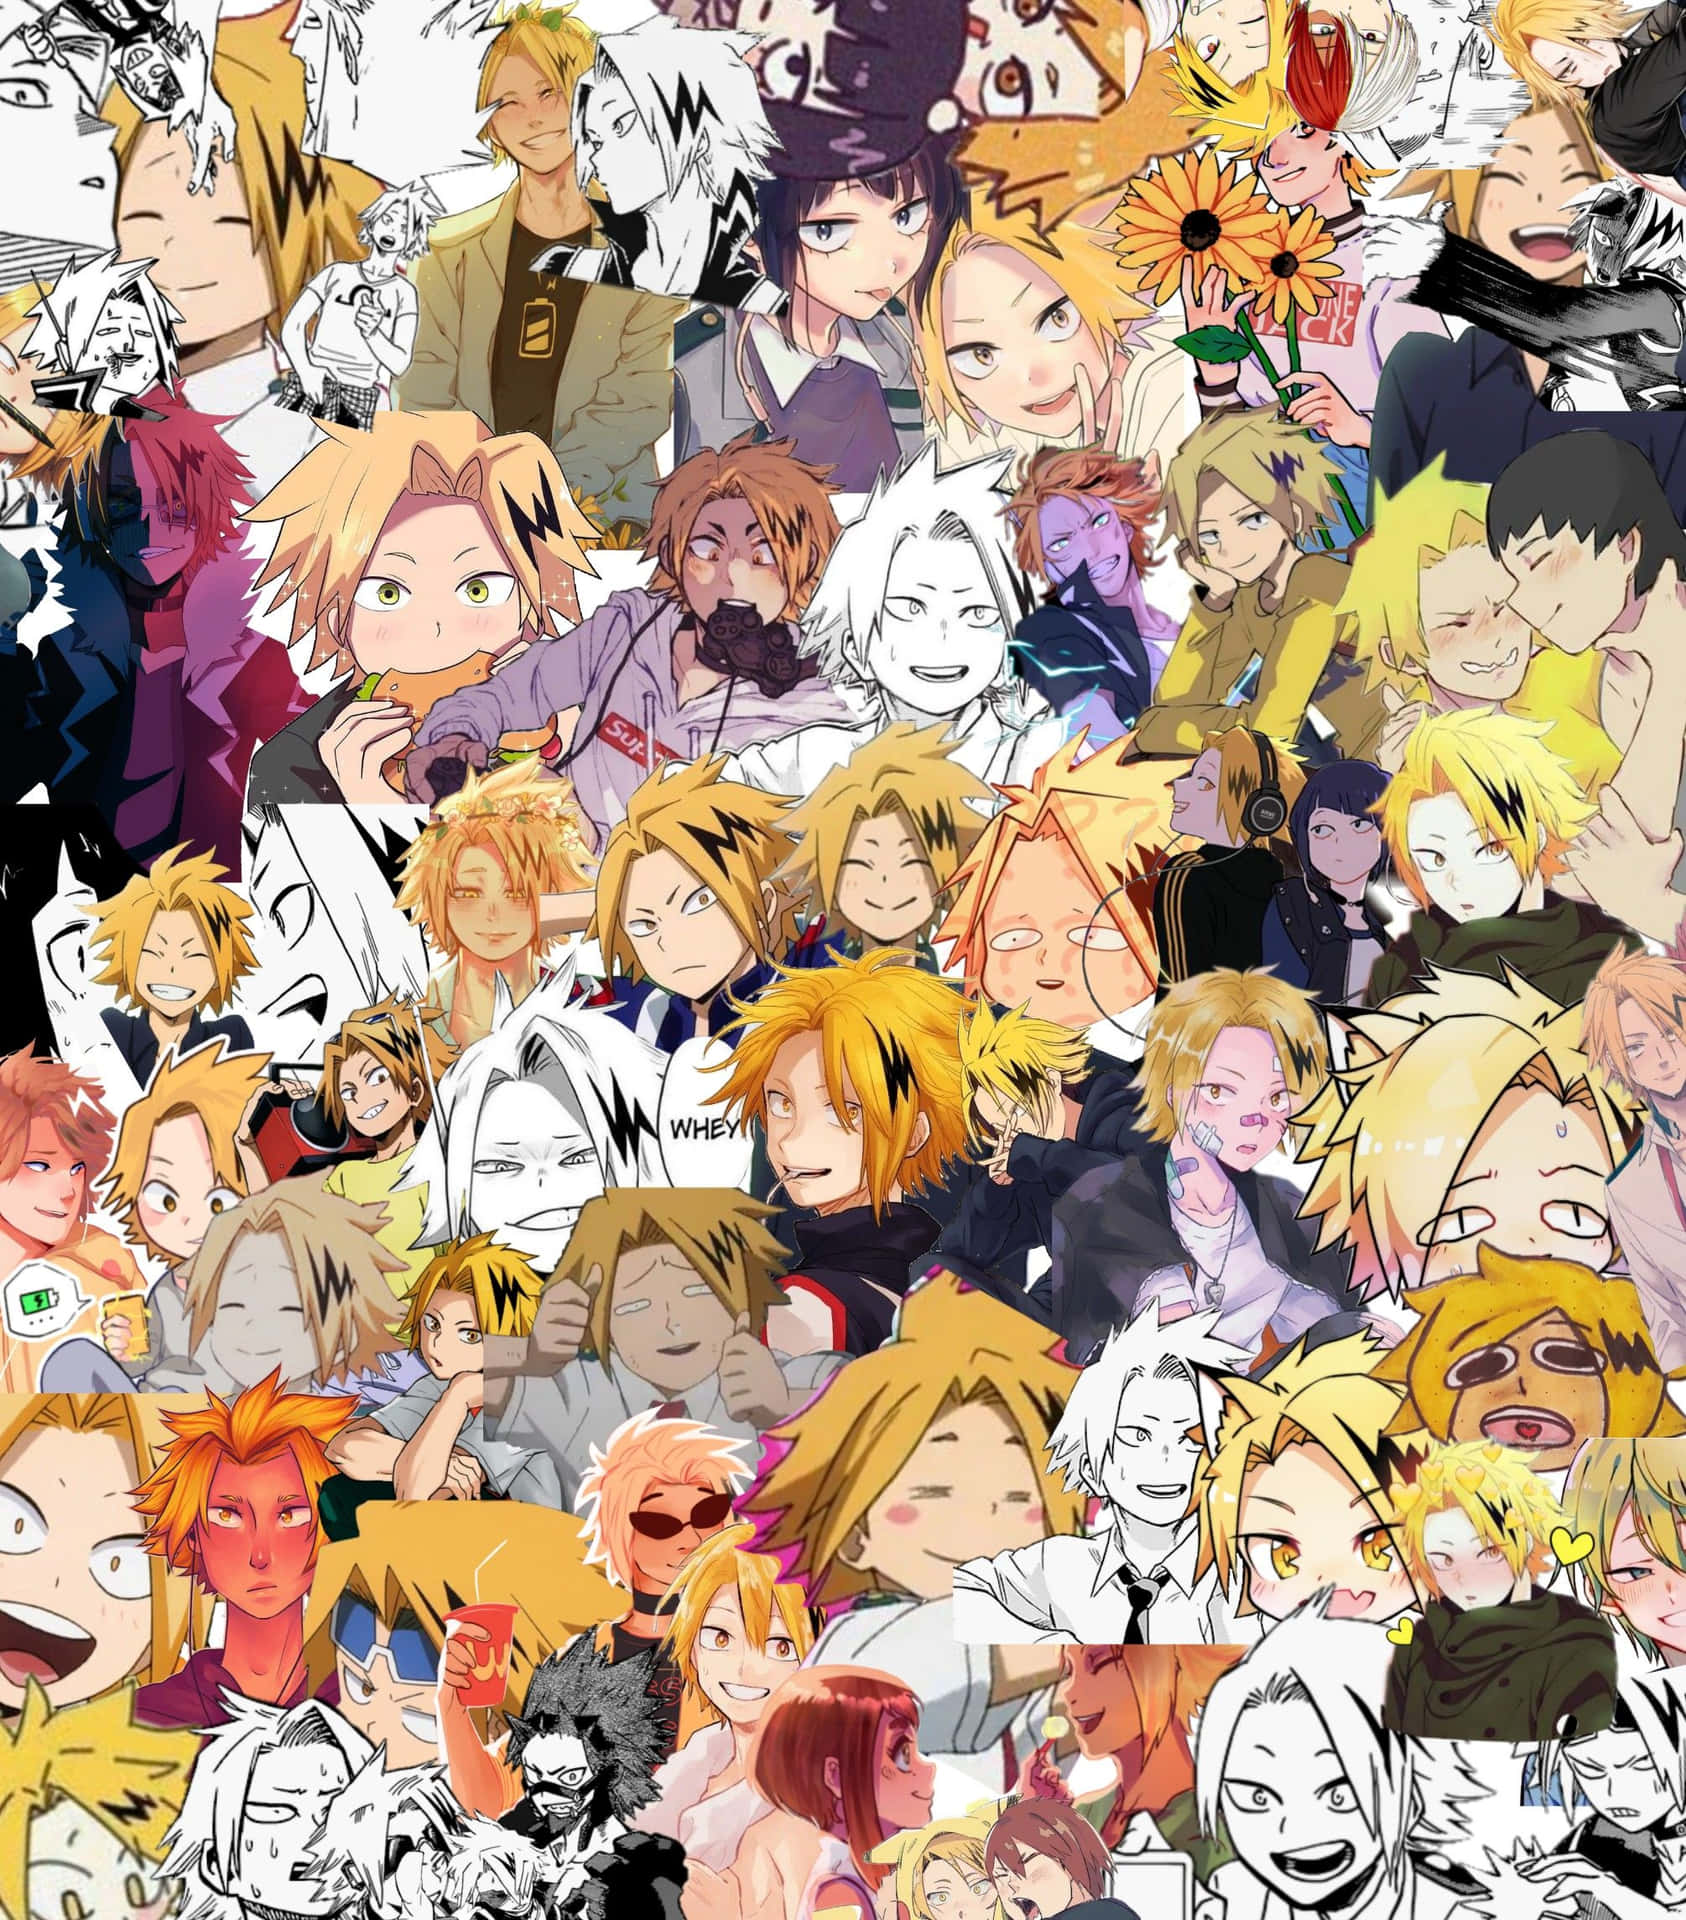 Collage of naruto and sasuke from the anime series naruto - Denki Kaminari